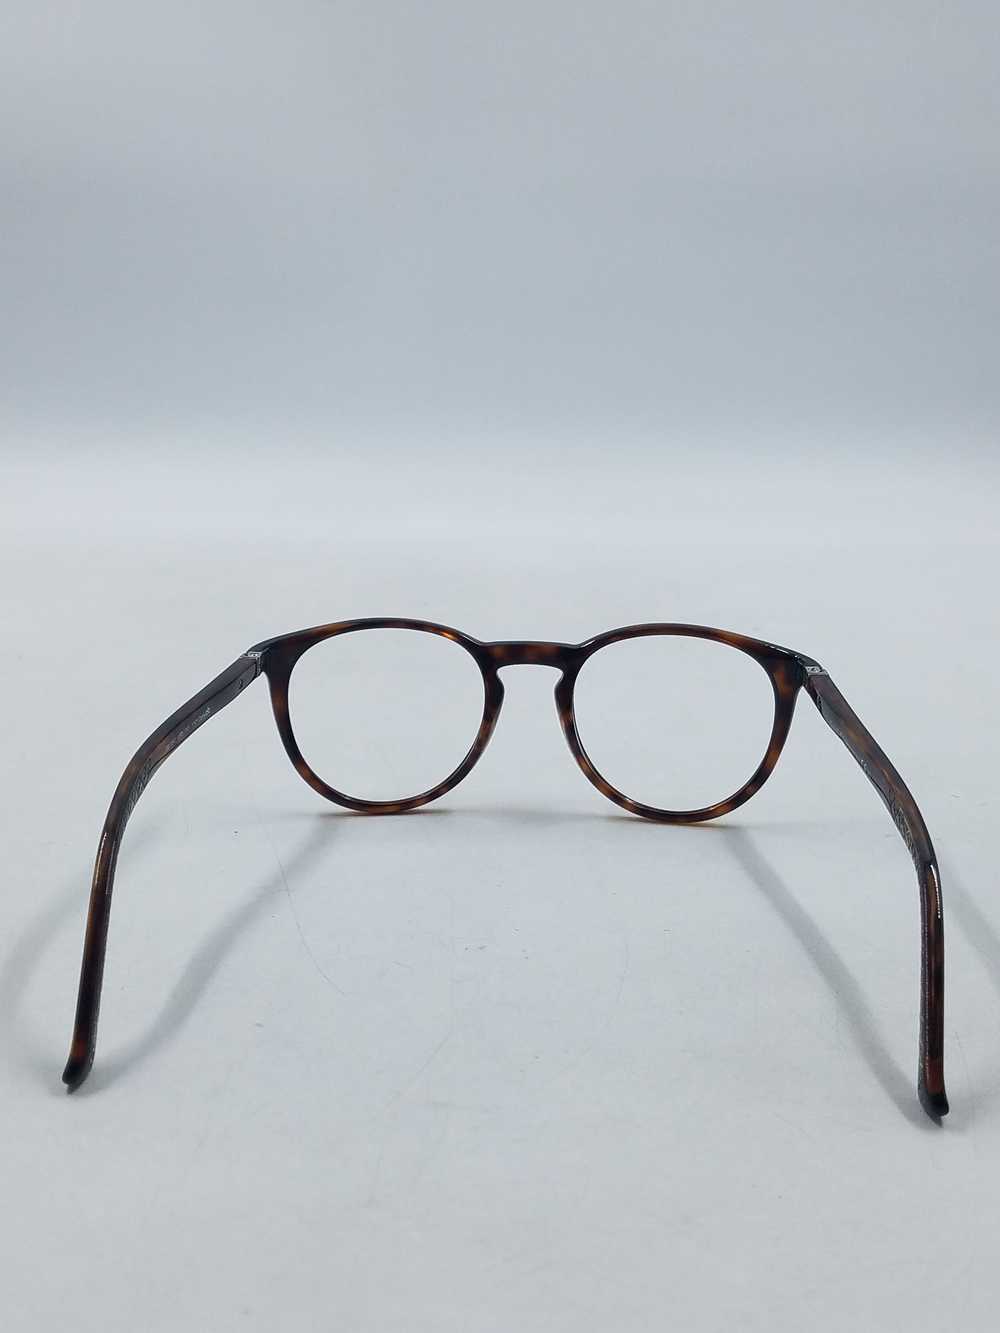 Gucci Tortoise Round Eyeglasses - image 3